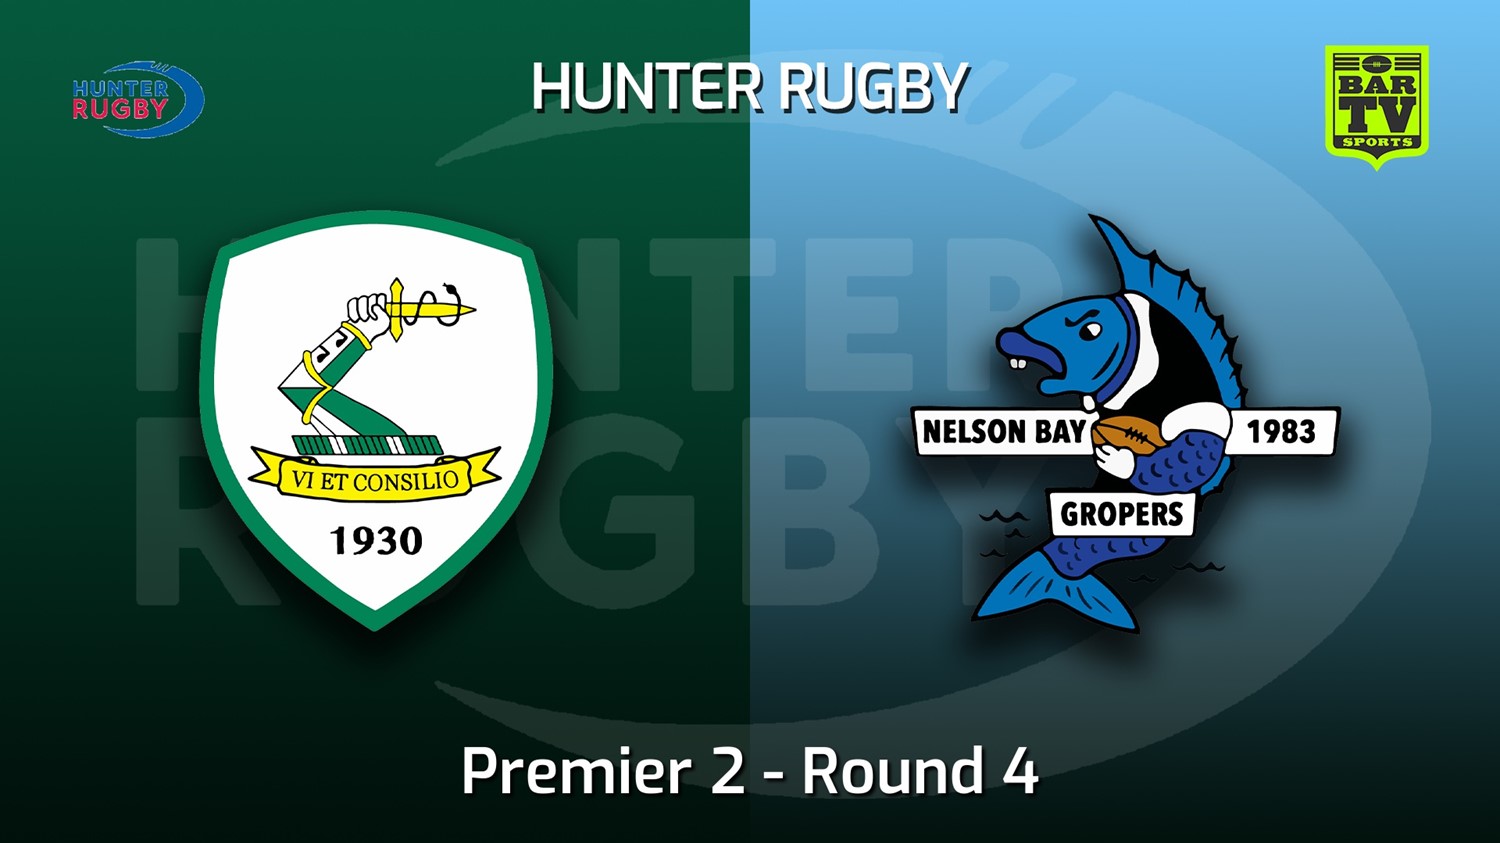 220514-Hunter Rugby Round 4 - Premier 2 - Merewether Carlton v Nelson Bay Gropers Slate Image